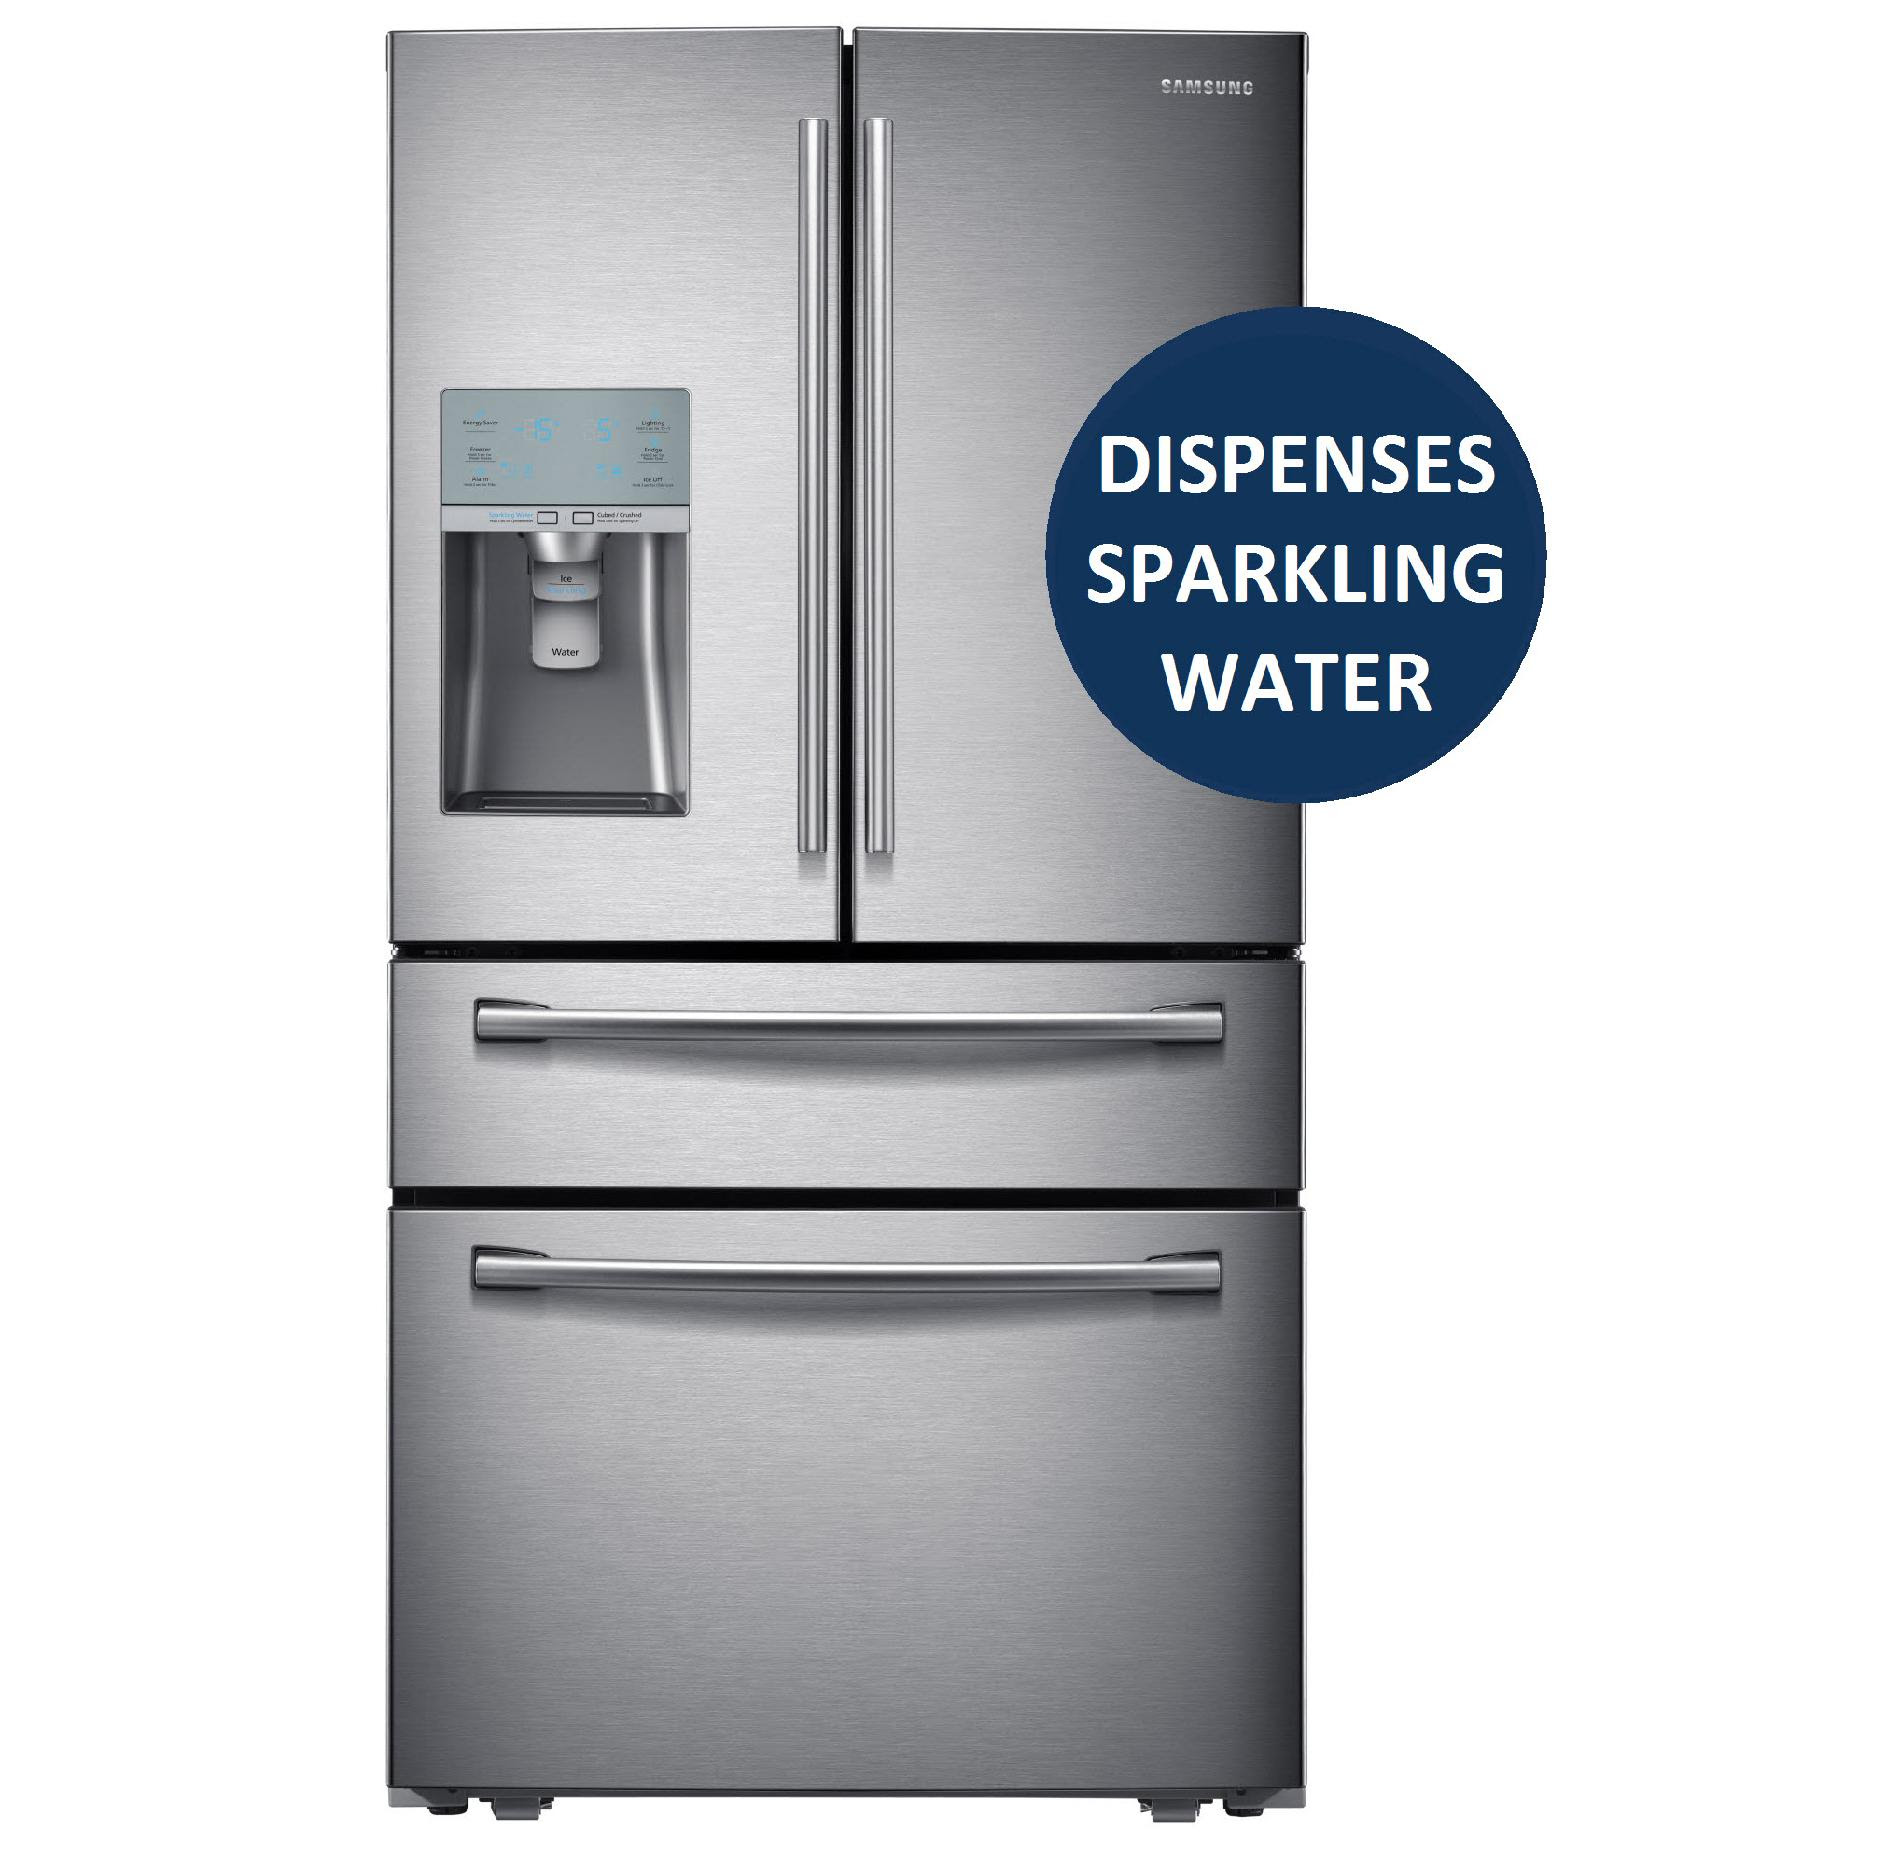 Samsung 30.5 cu. ft. 4-Door Refrigerator w/ Automatic Sparkling Water Dispenser - Stainless Steel